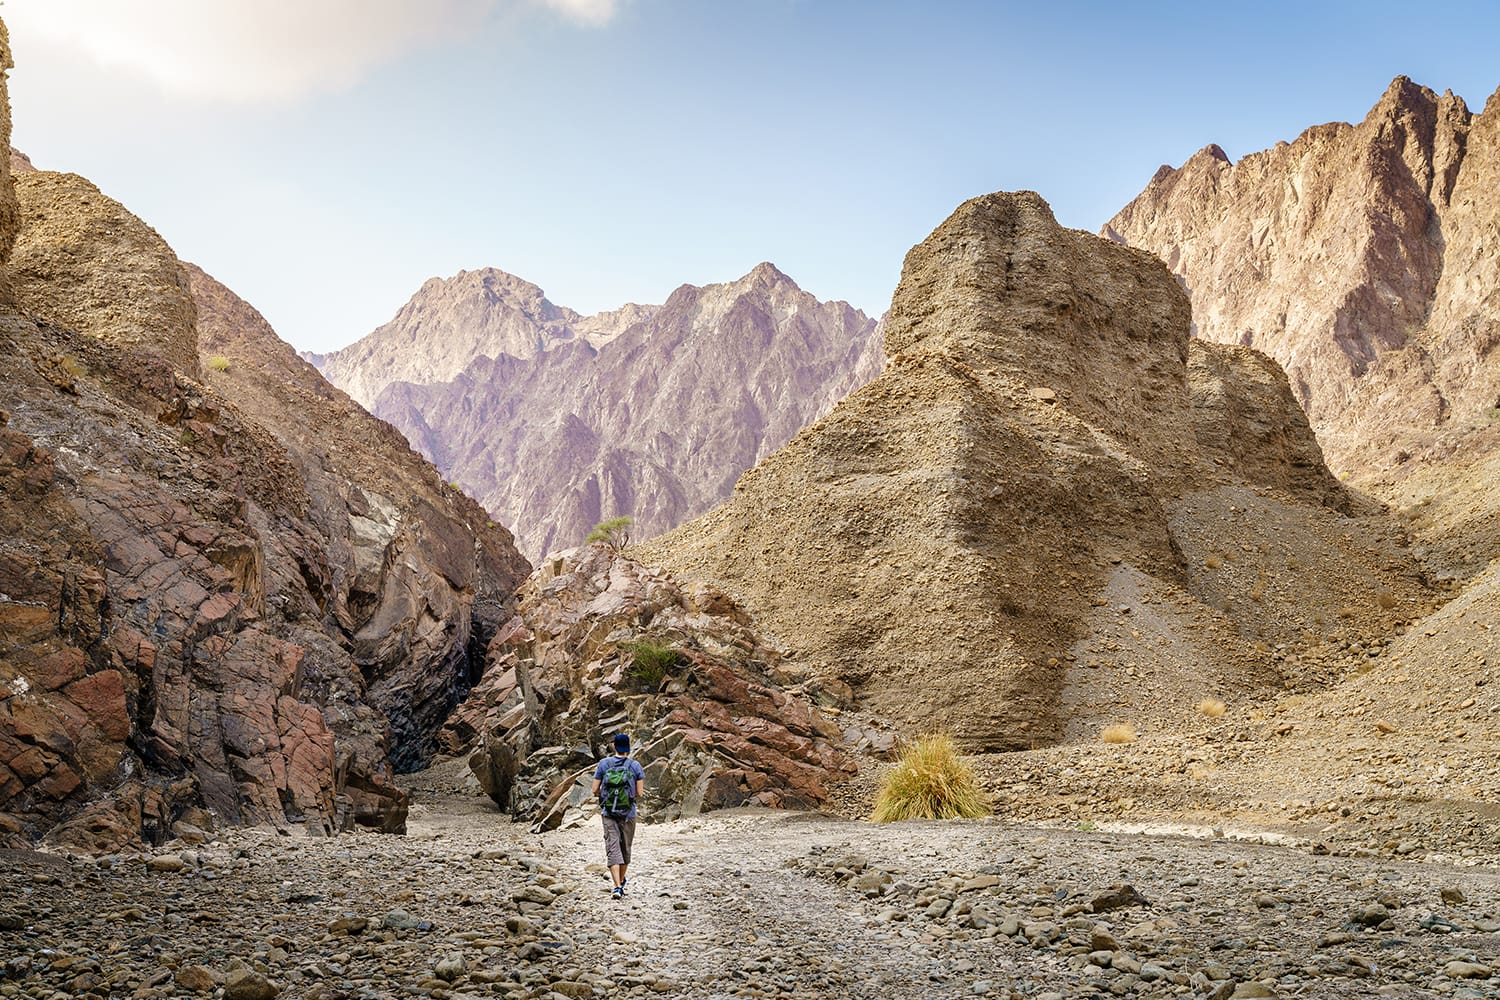 Seorang pria sedang mendaki wadi di Pegunungan Hajar dekat Hatta, UEA